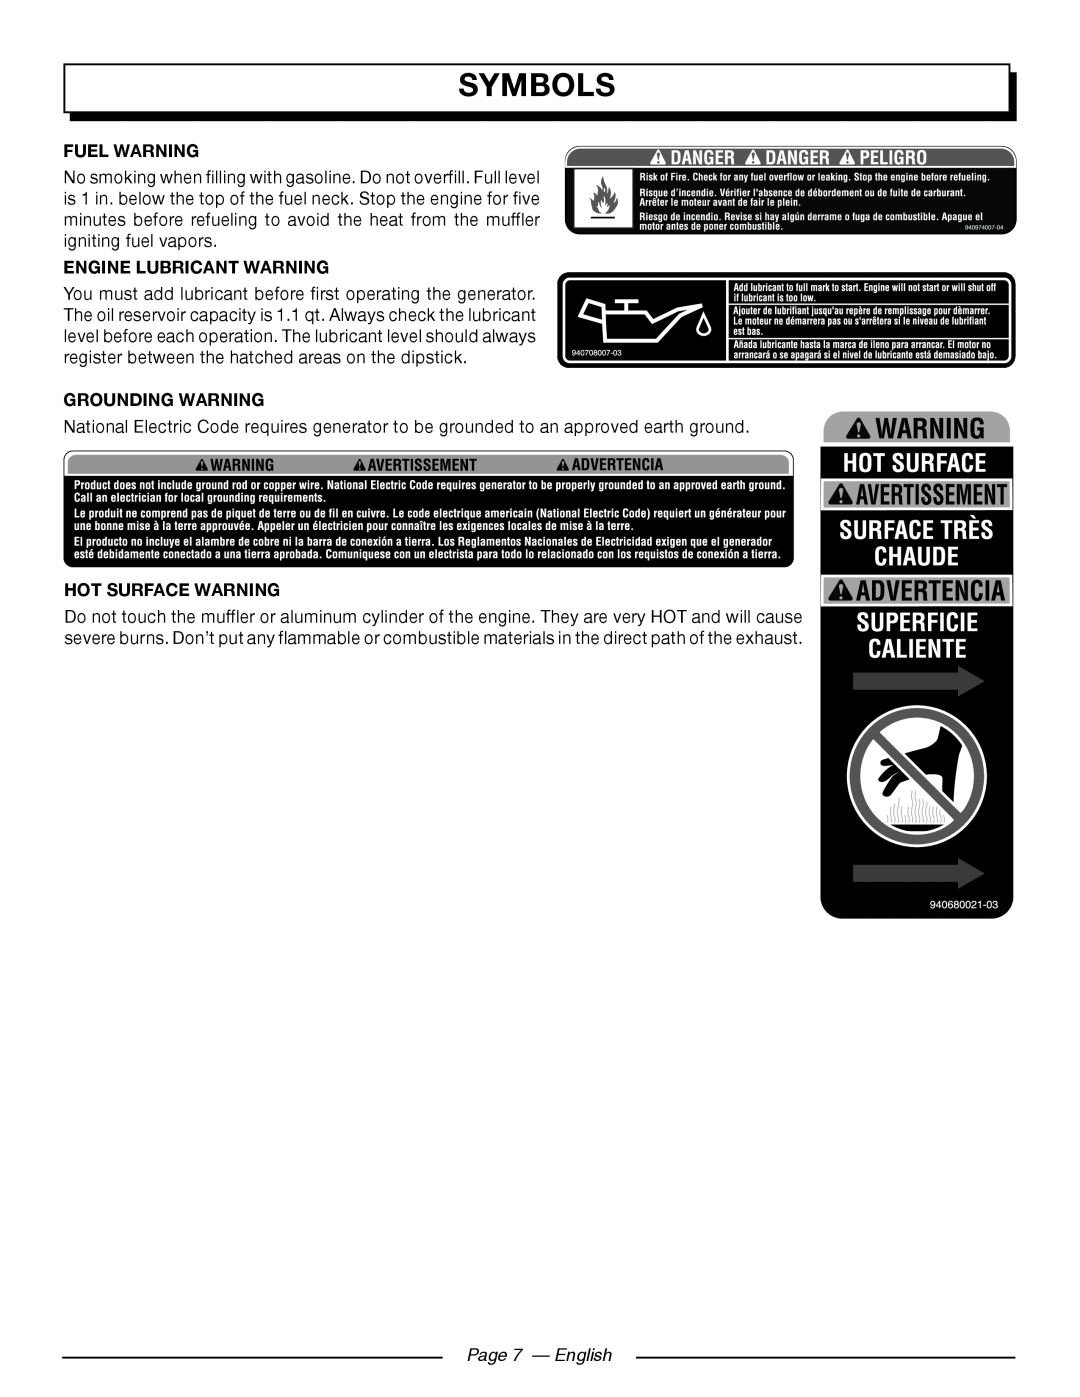 Homelite UT905011 Fuel Warning, Engine Lubricant Warning, Grounding Warning, Hot Surface Warning, Page 7 — English 